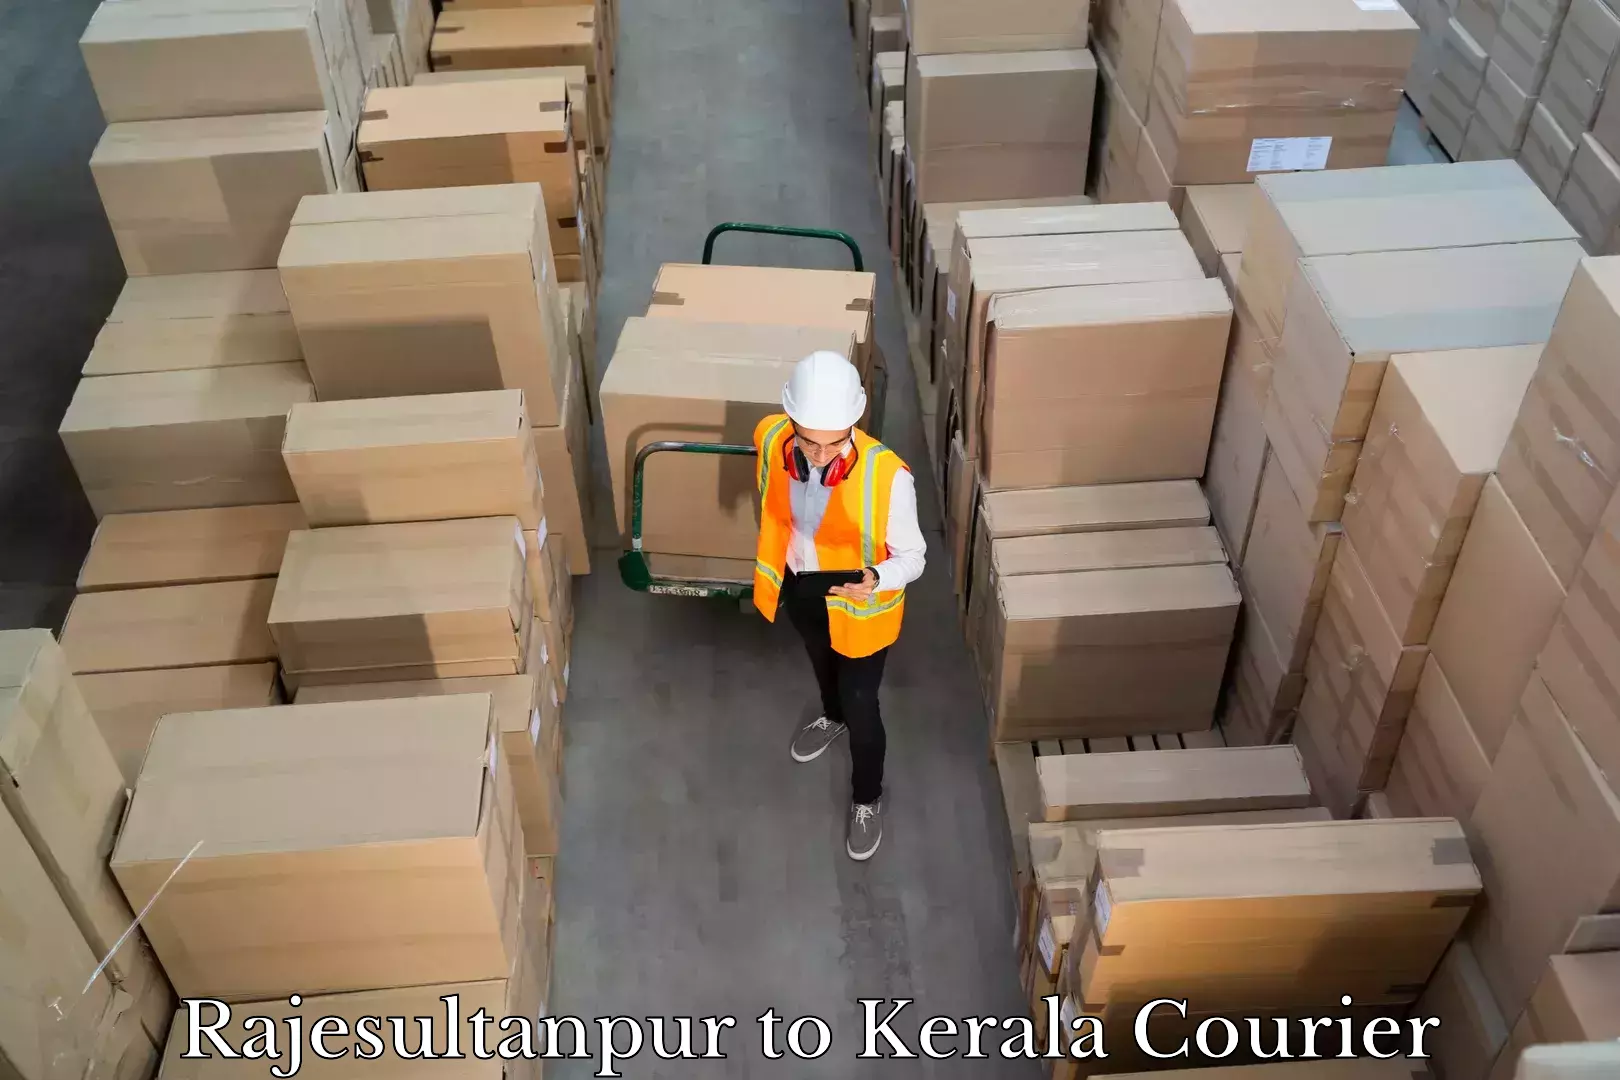 Luggage shipment tracking Rajesultanpur to Kochi